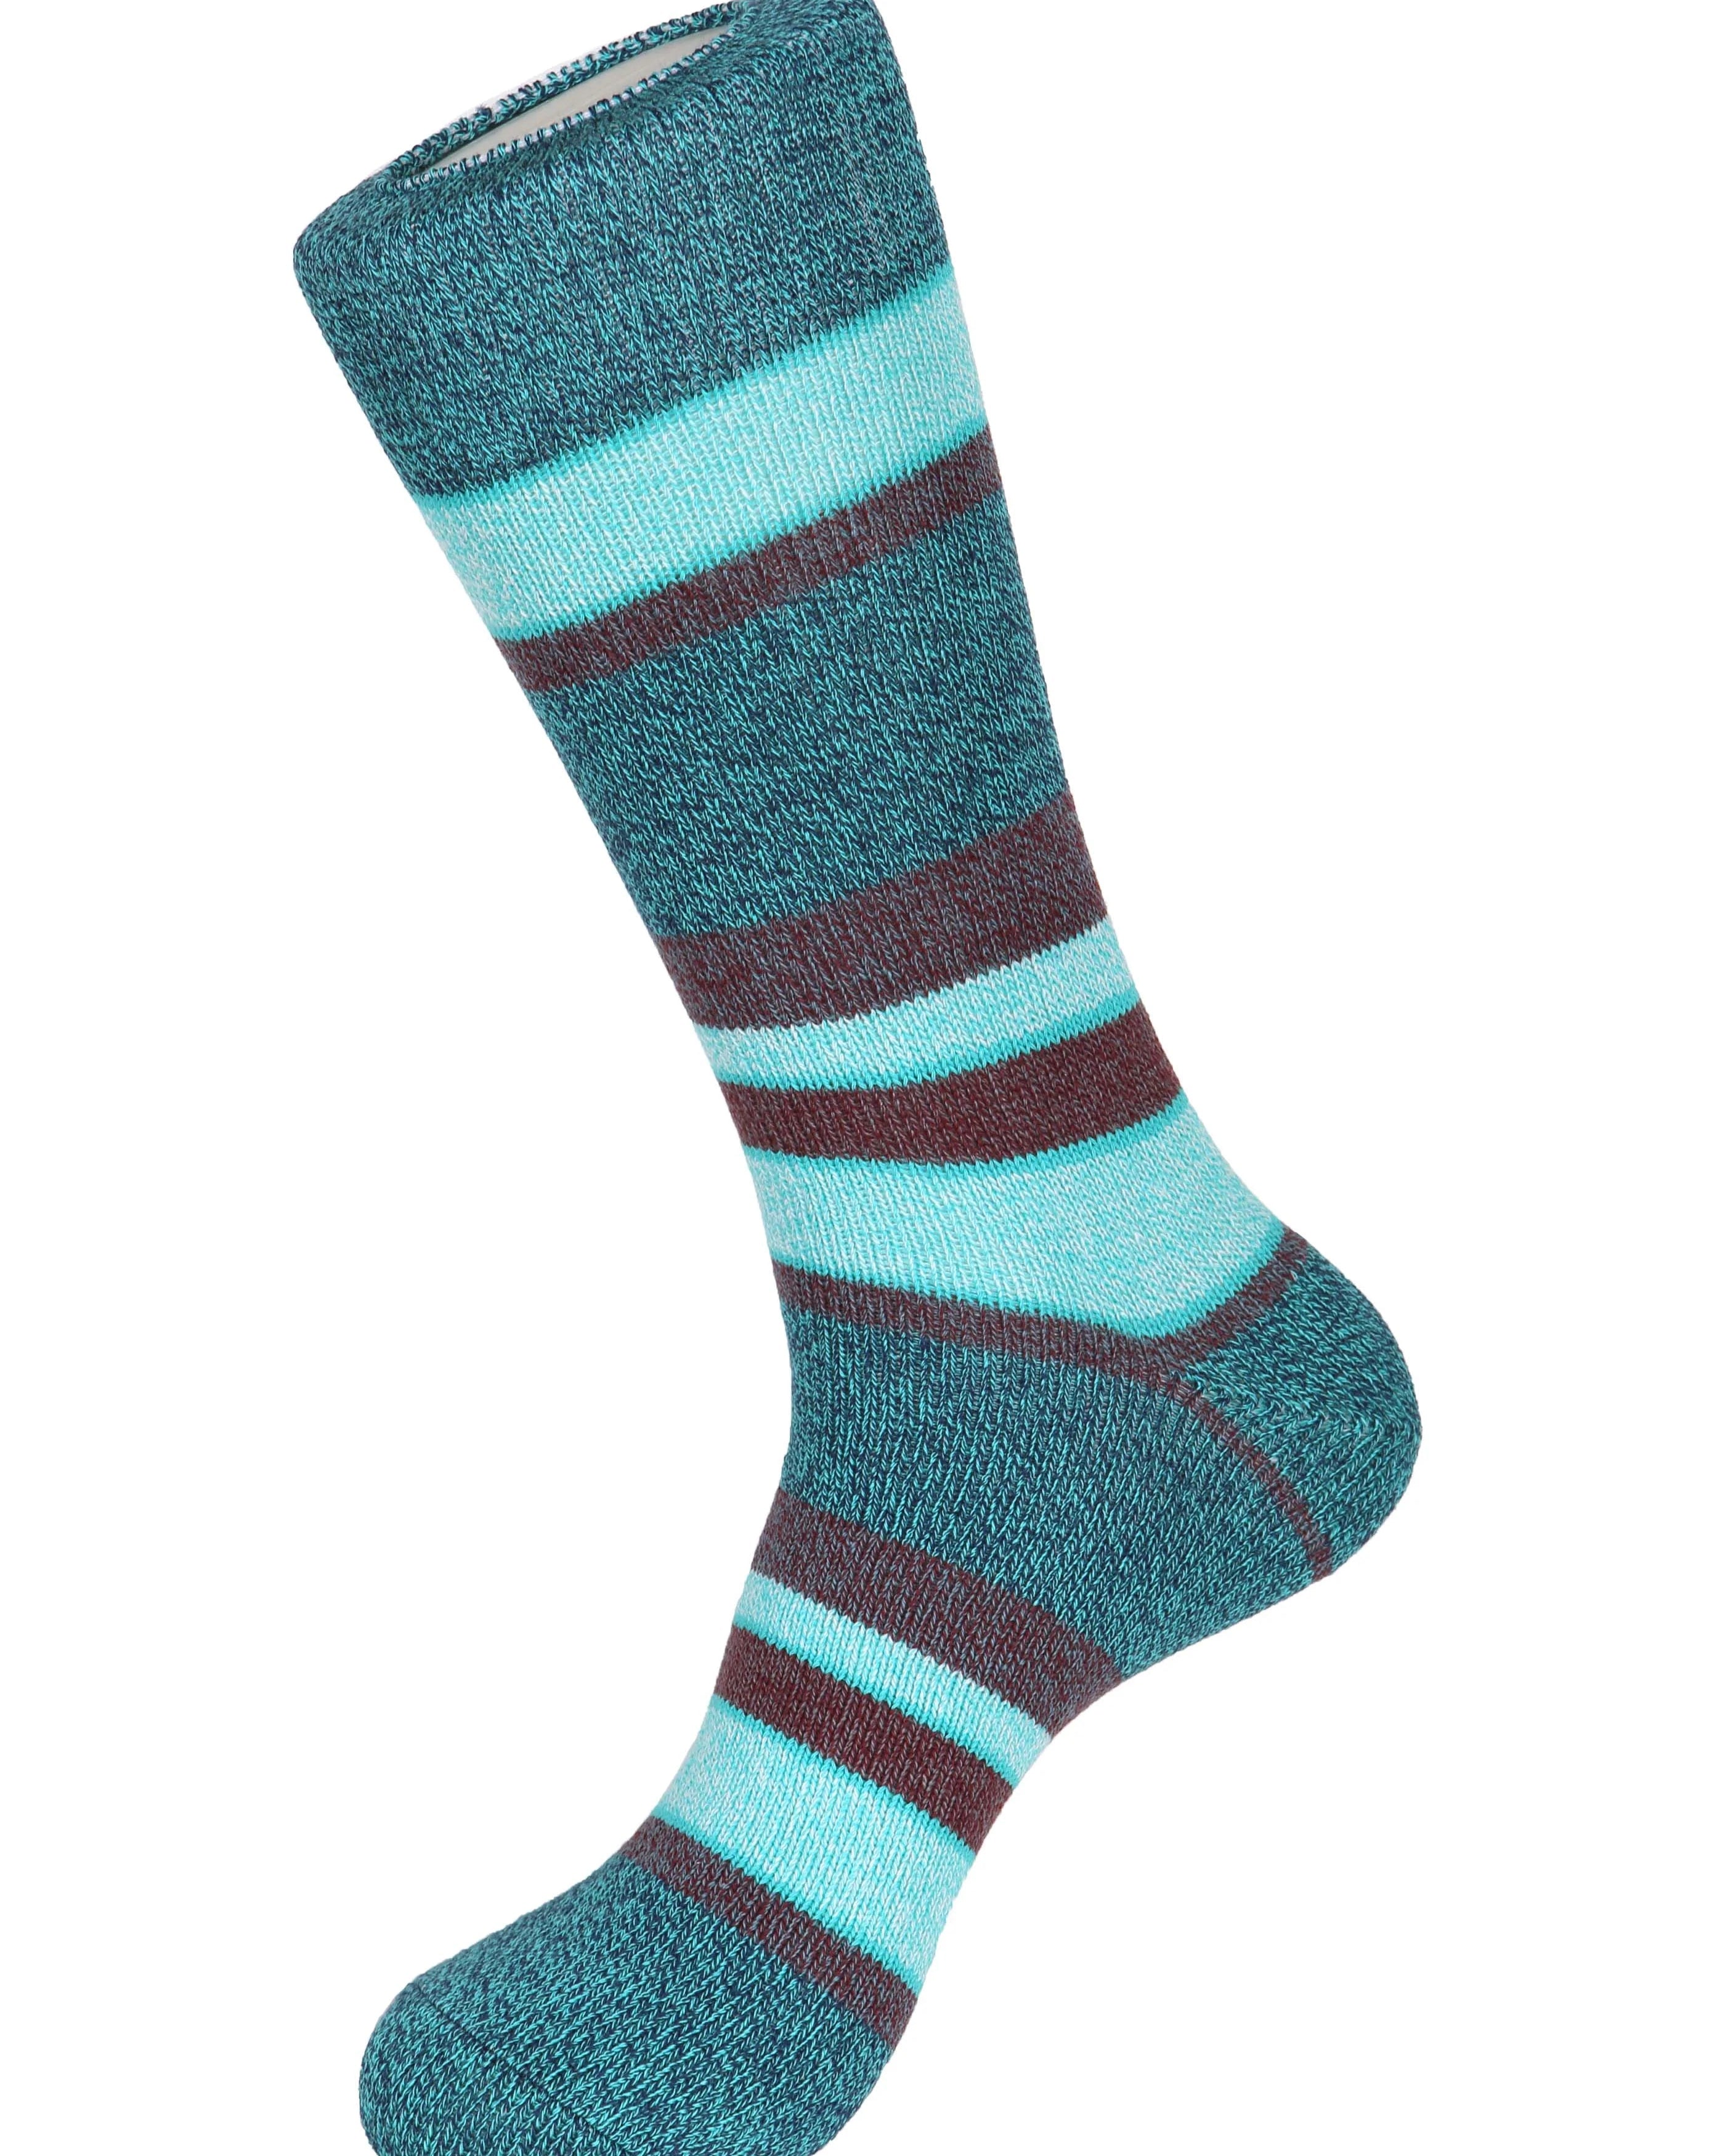 Double Stripe Boot Socks - Men's Socks at Menzclub